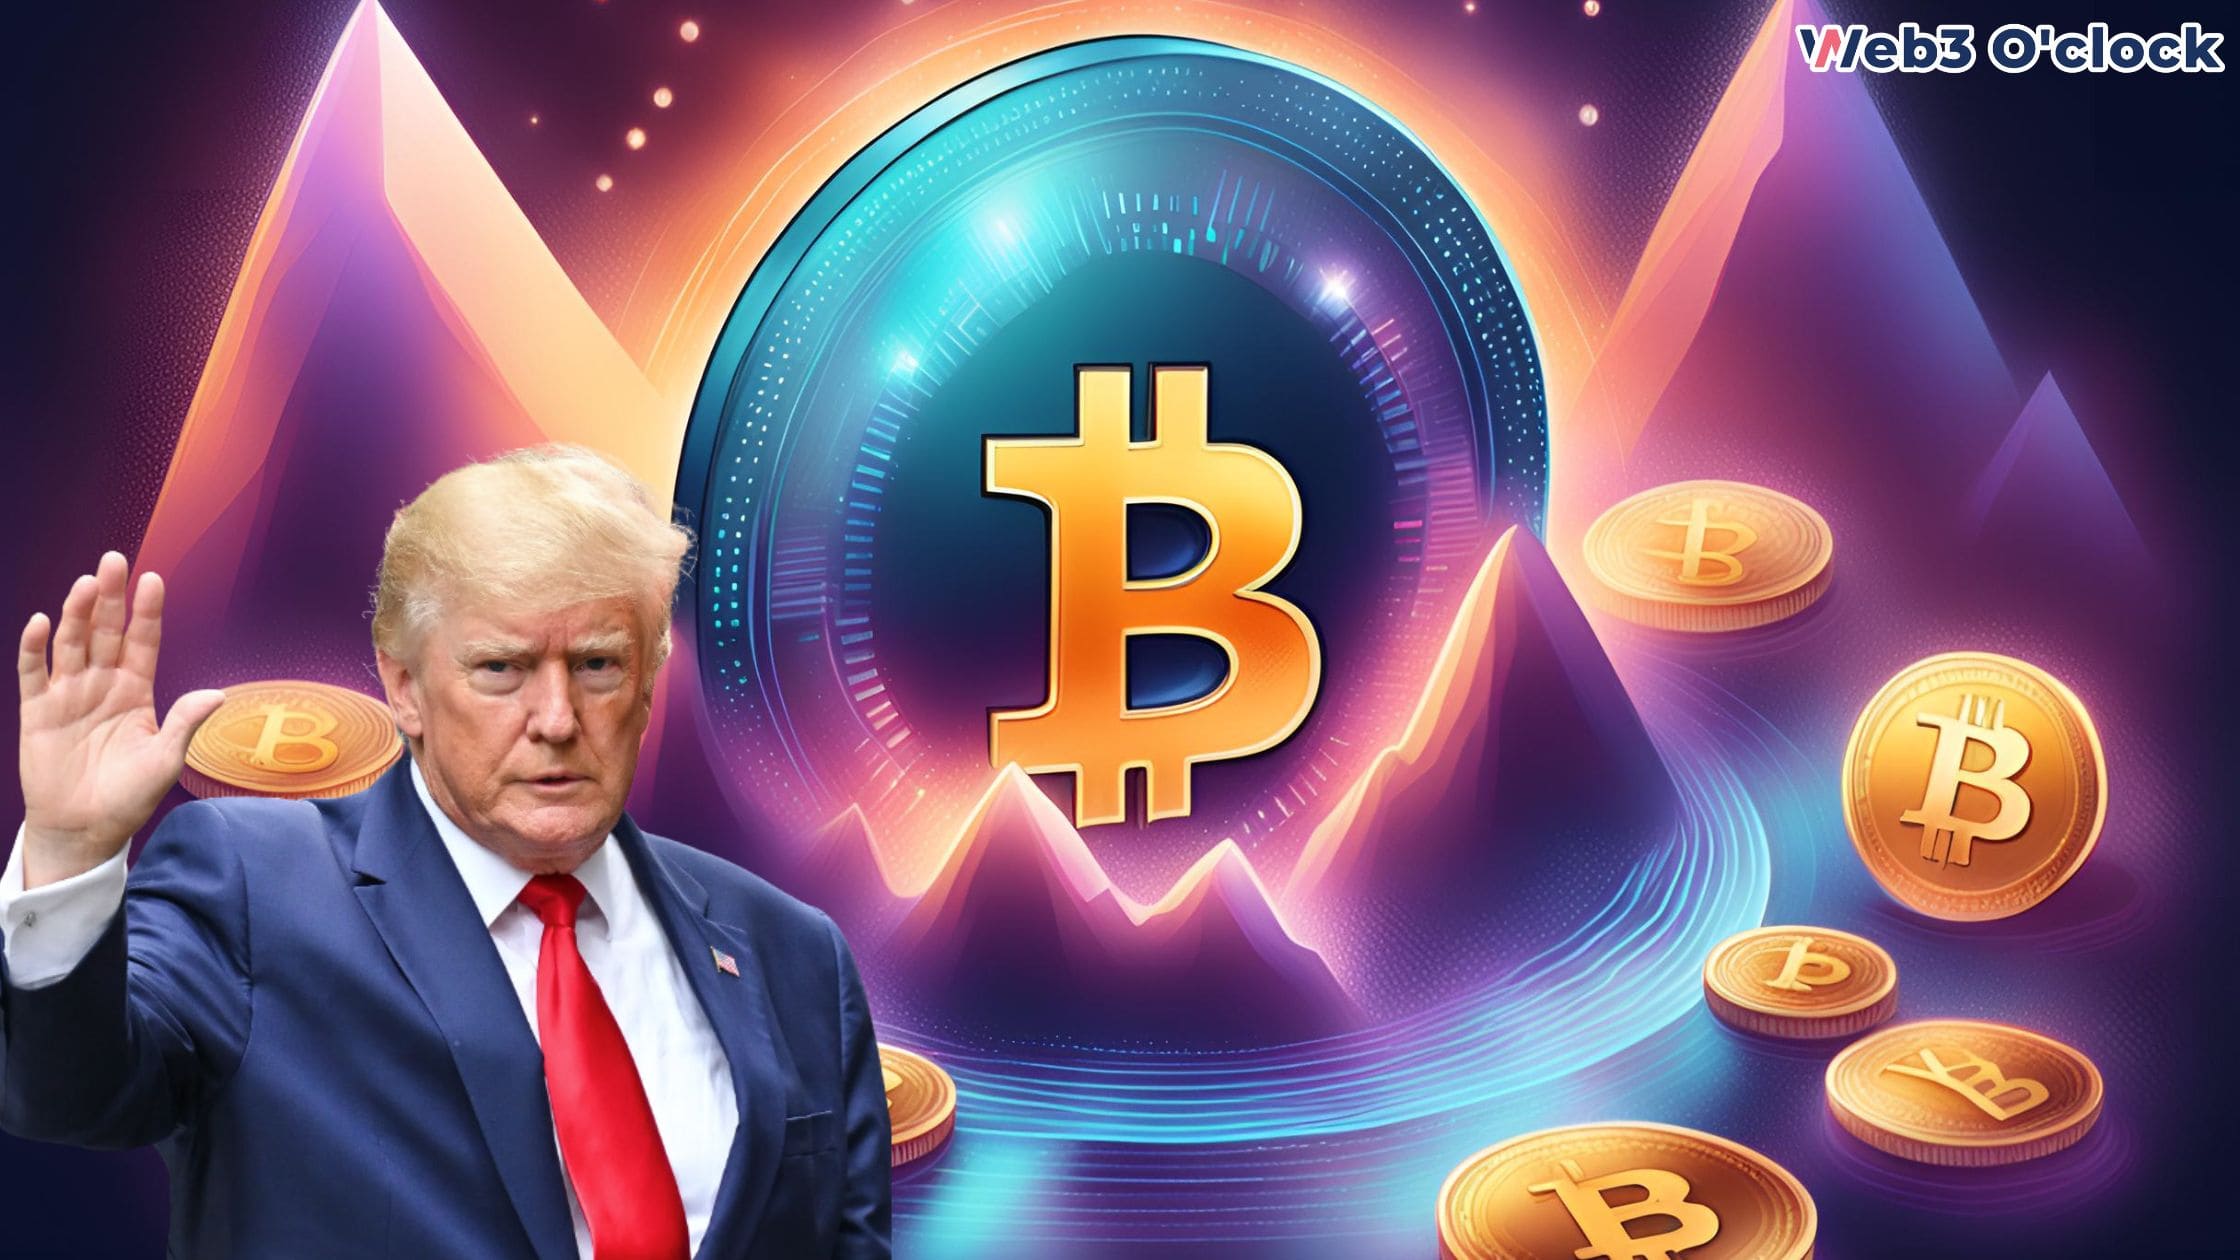 Trump's Embrace of Crypto by web3 o'clock